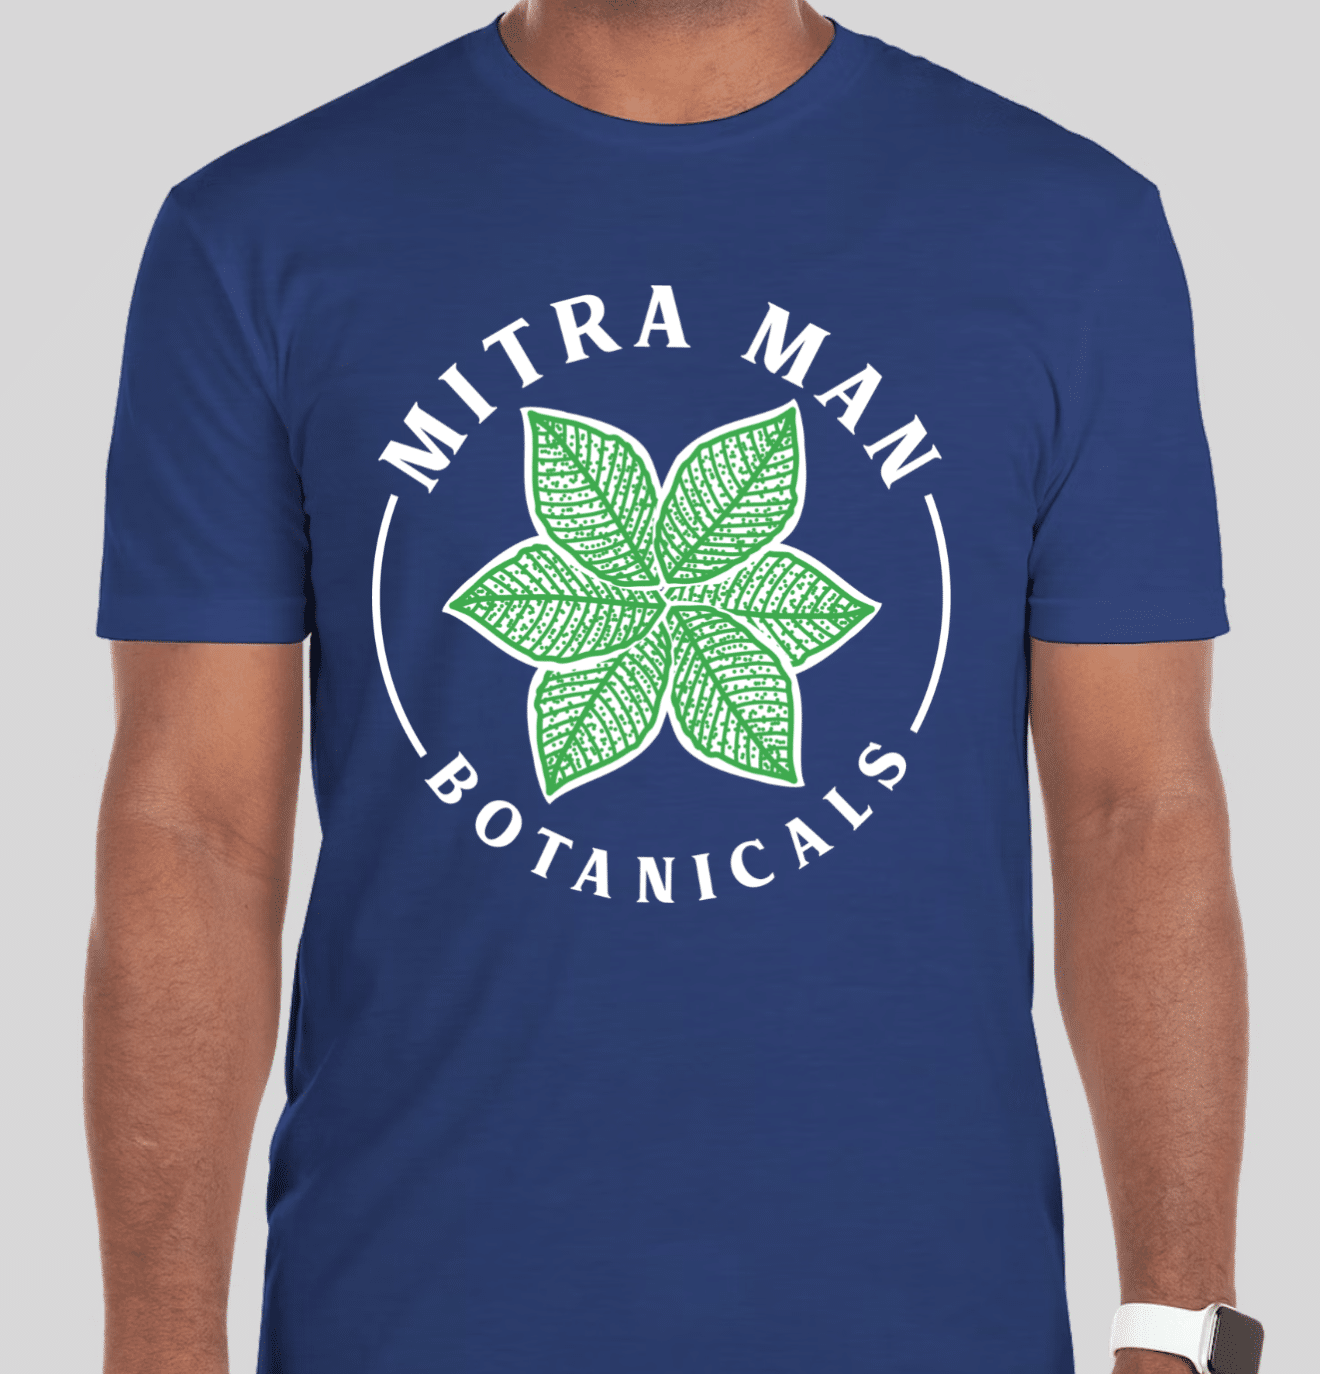 MitraMan T-Shirt